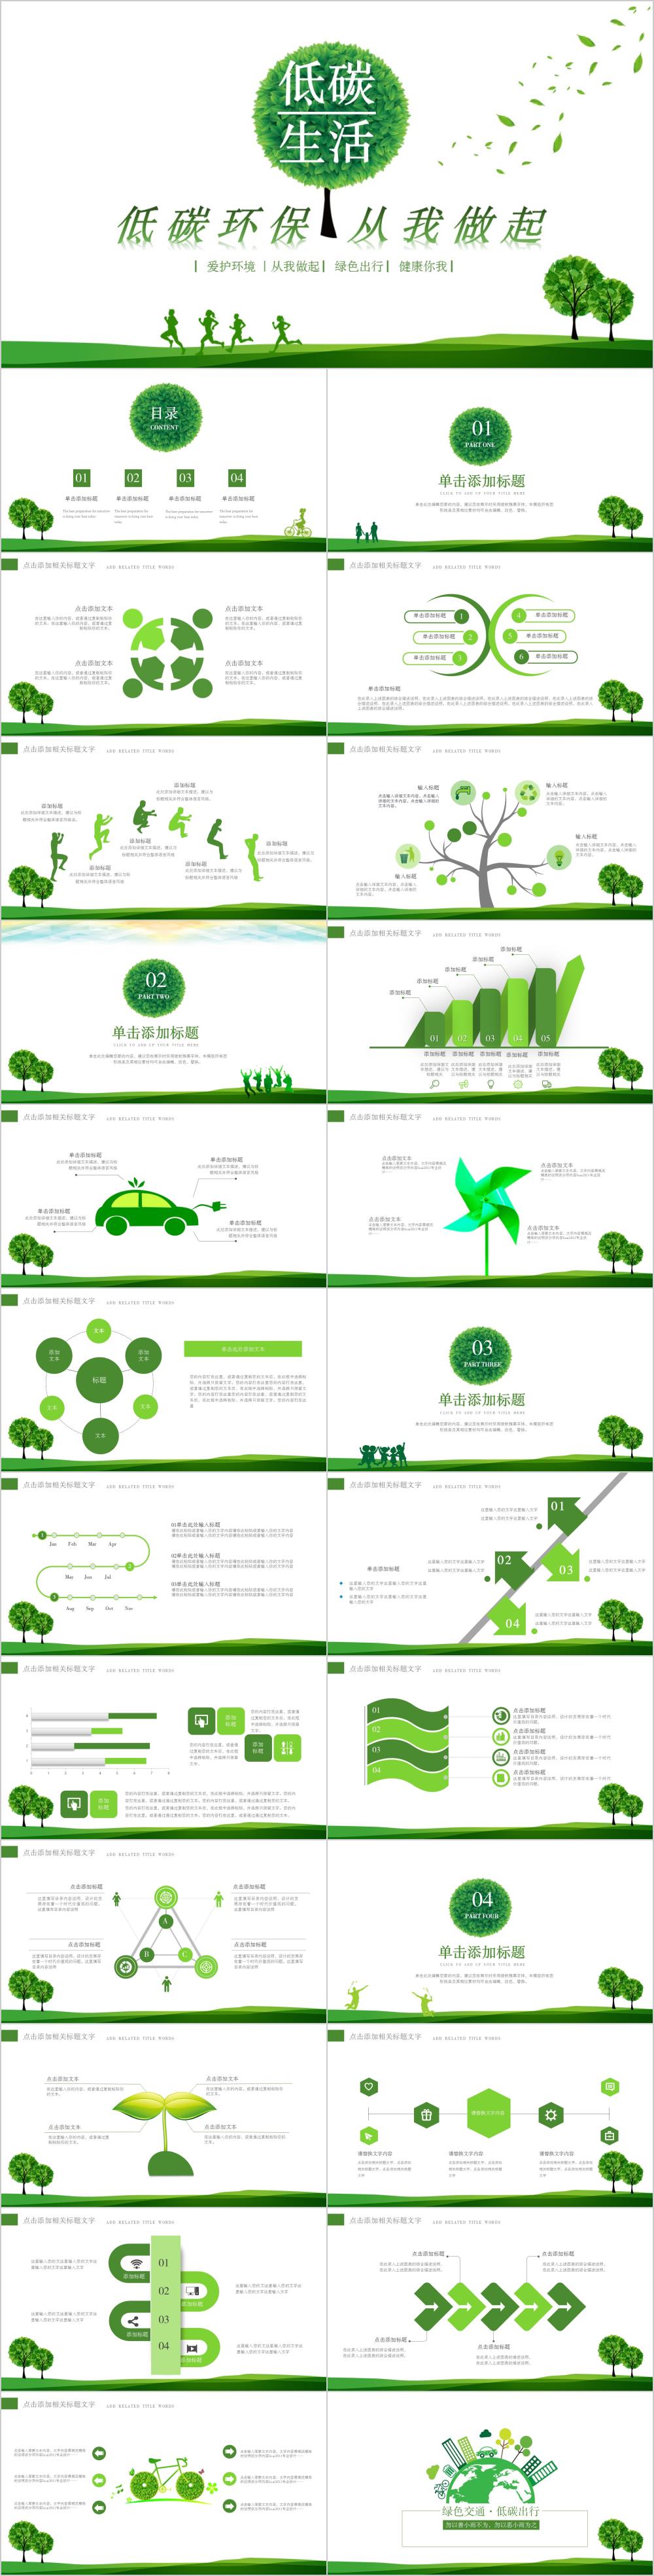 绿色低碳生活公益宣传PPT模板